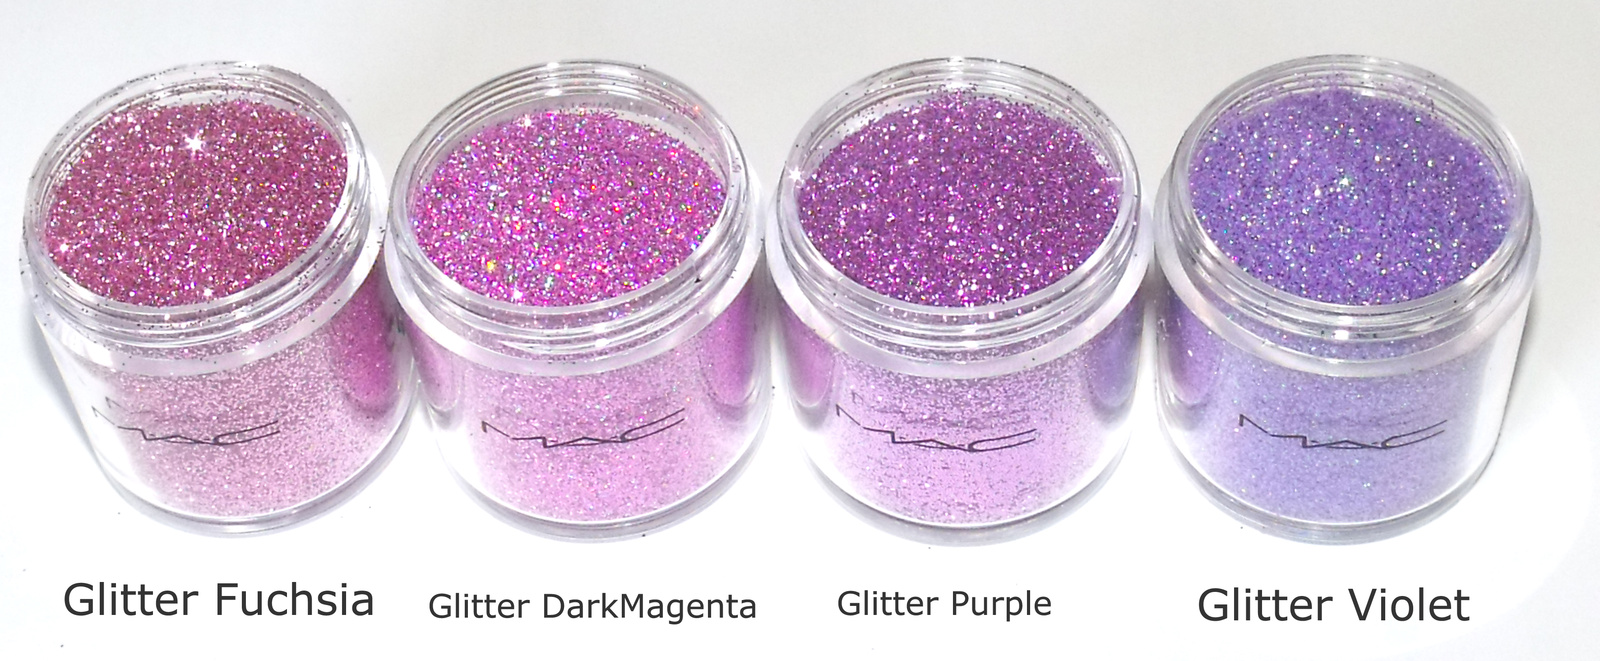 Glitter Lila 42-37-45-34 (2)